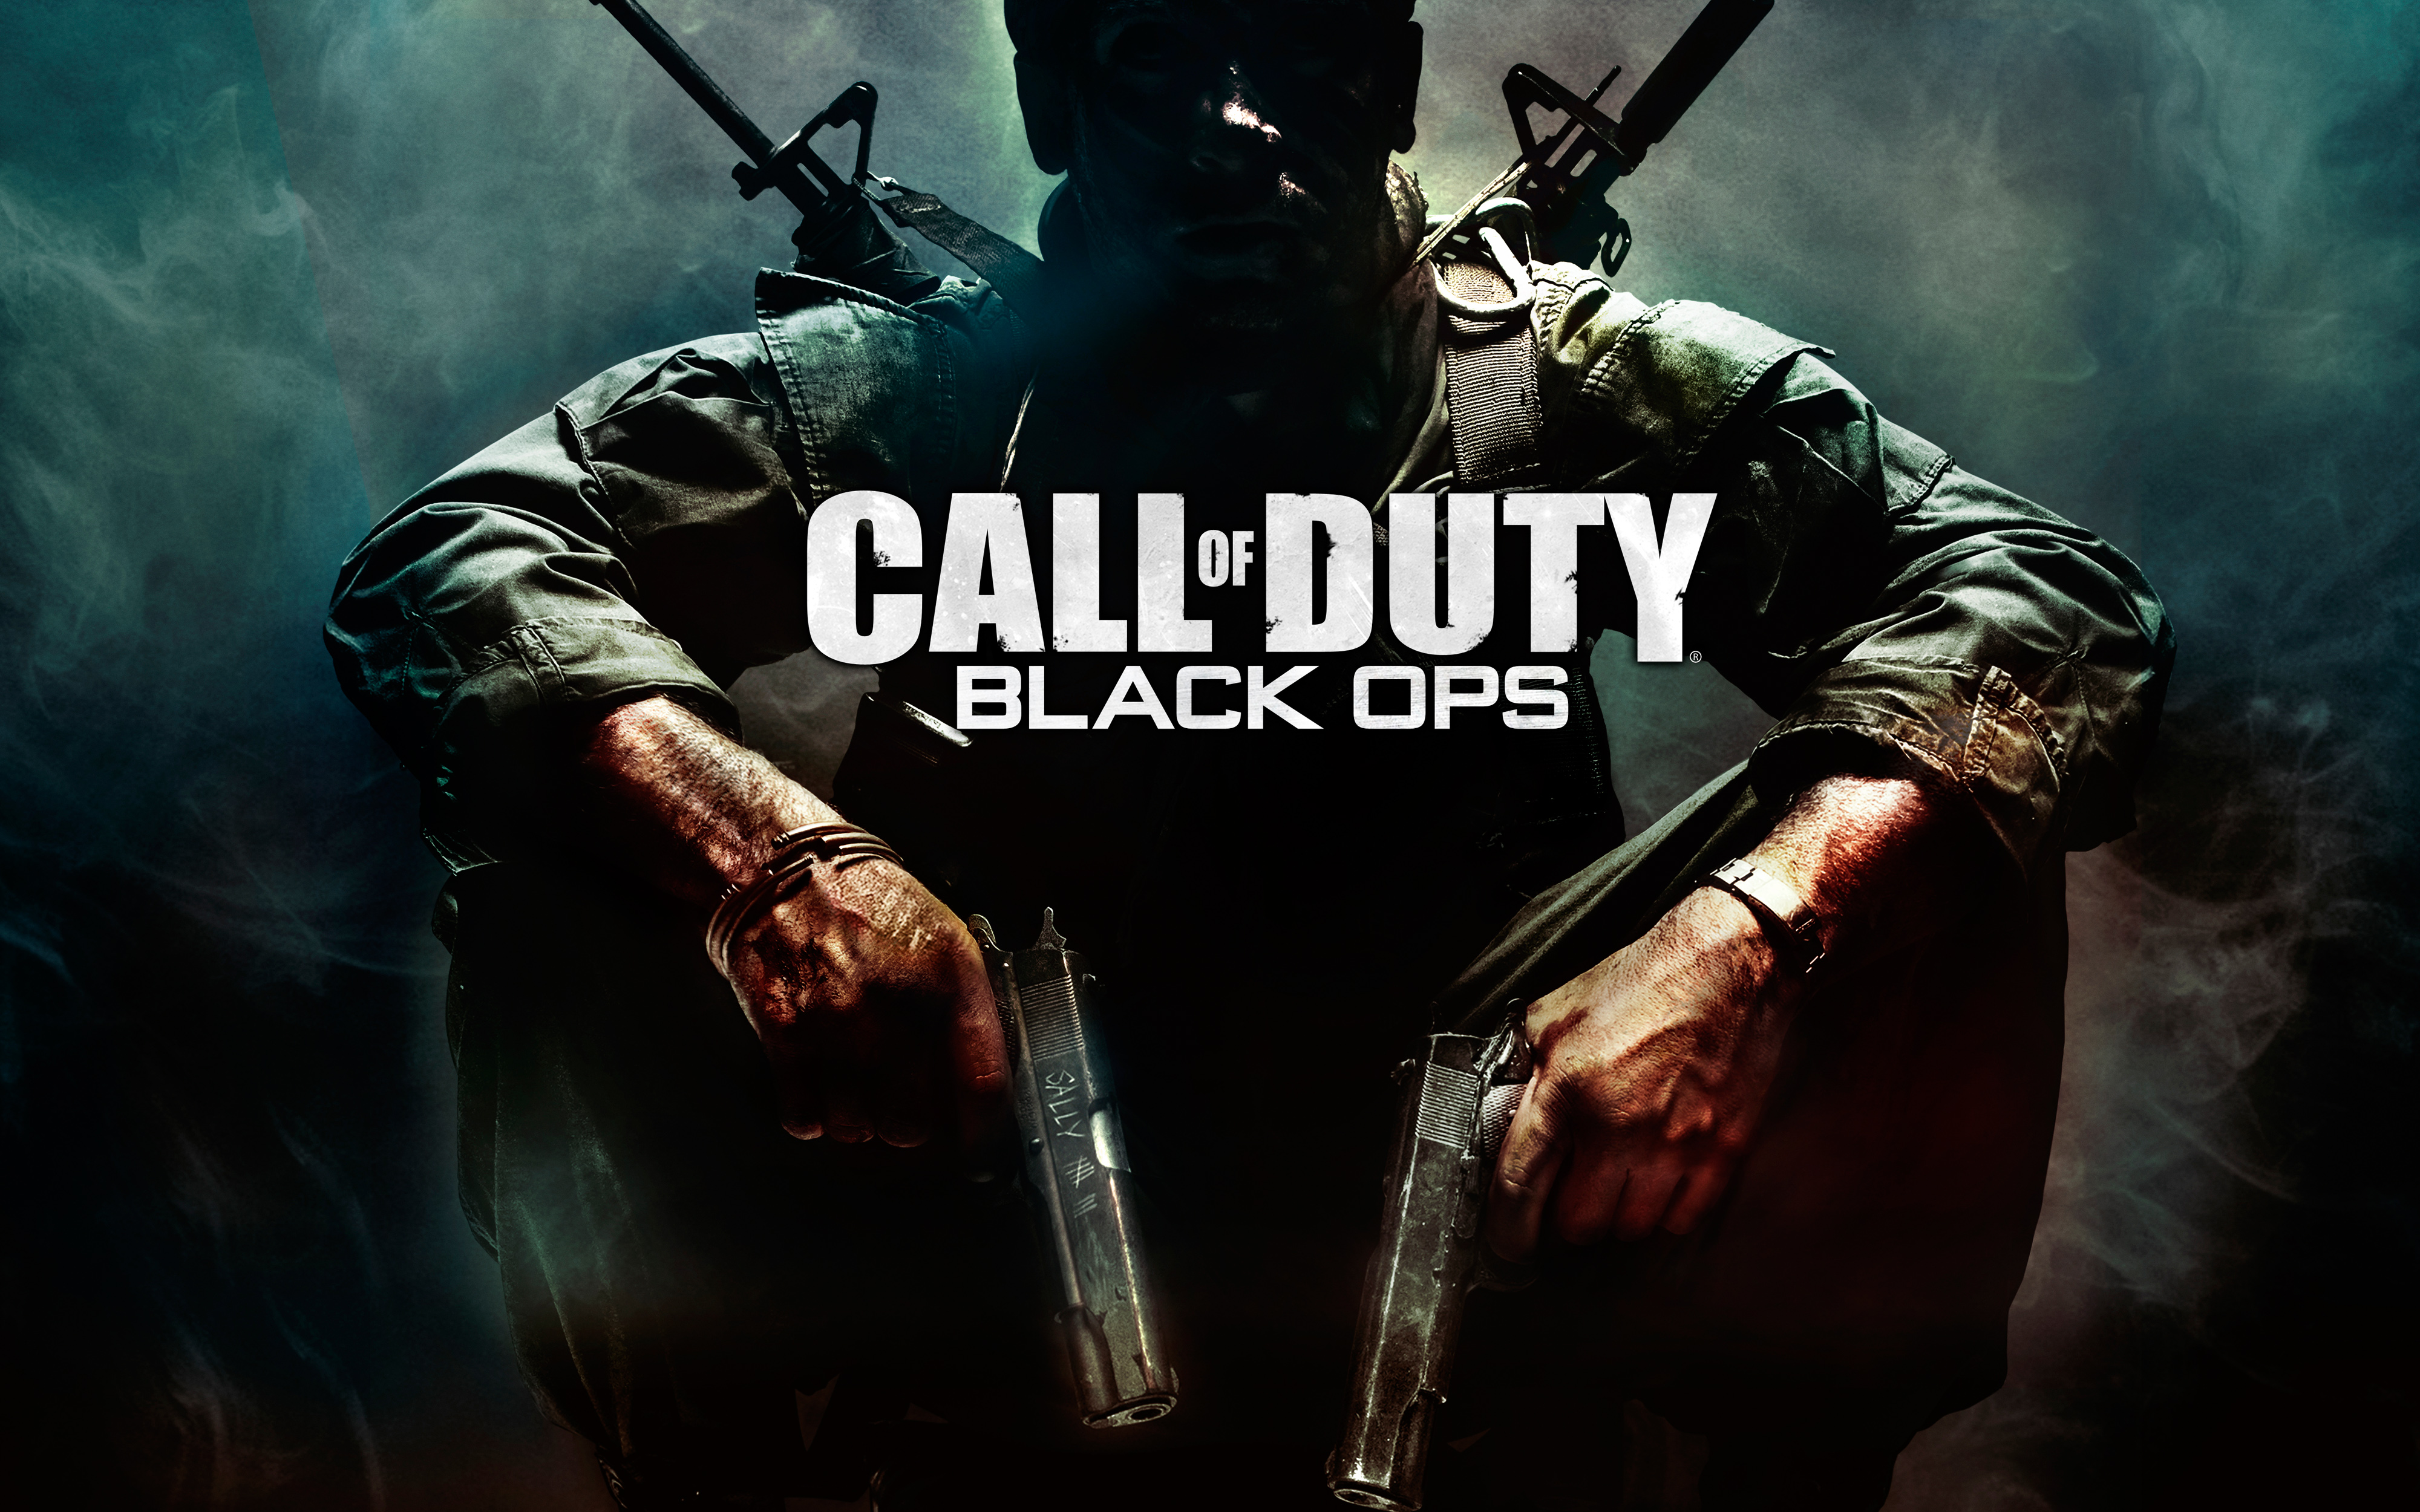 Call Of Duty Black Ops Wallpaper - Wallpaper, High Definition, High